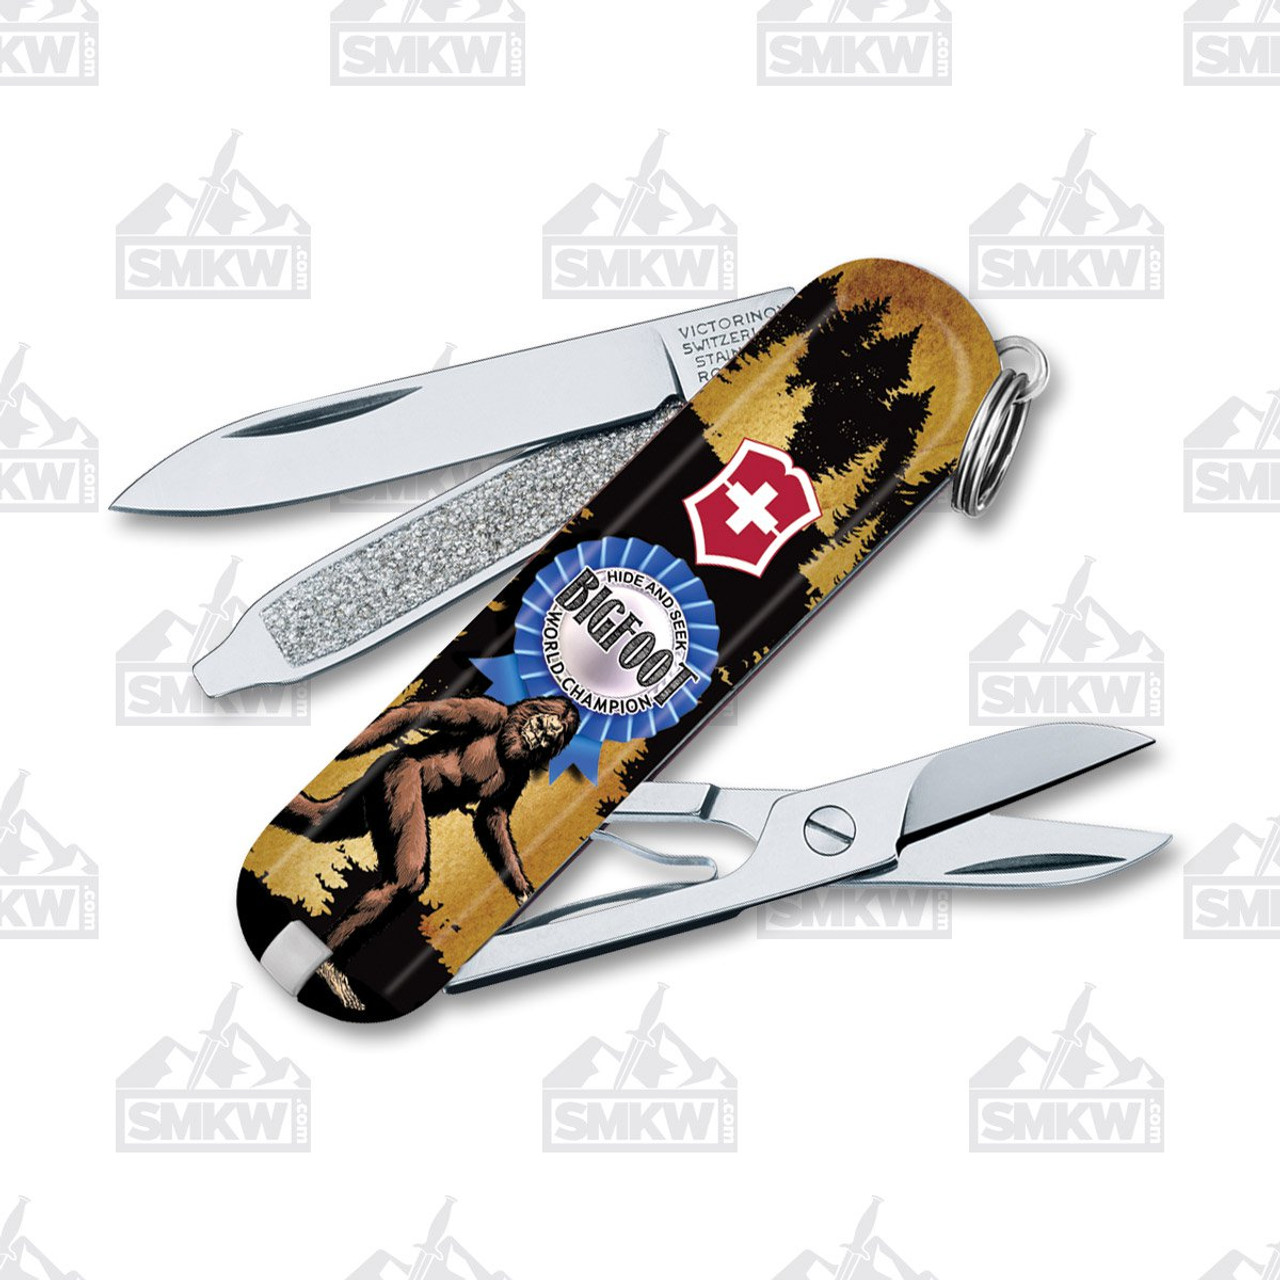 Victorinox Black Cat Classic SD Designer Swiss Army Knife at Swiss Knife  Shop